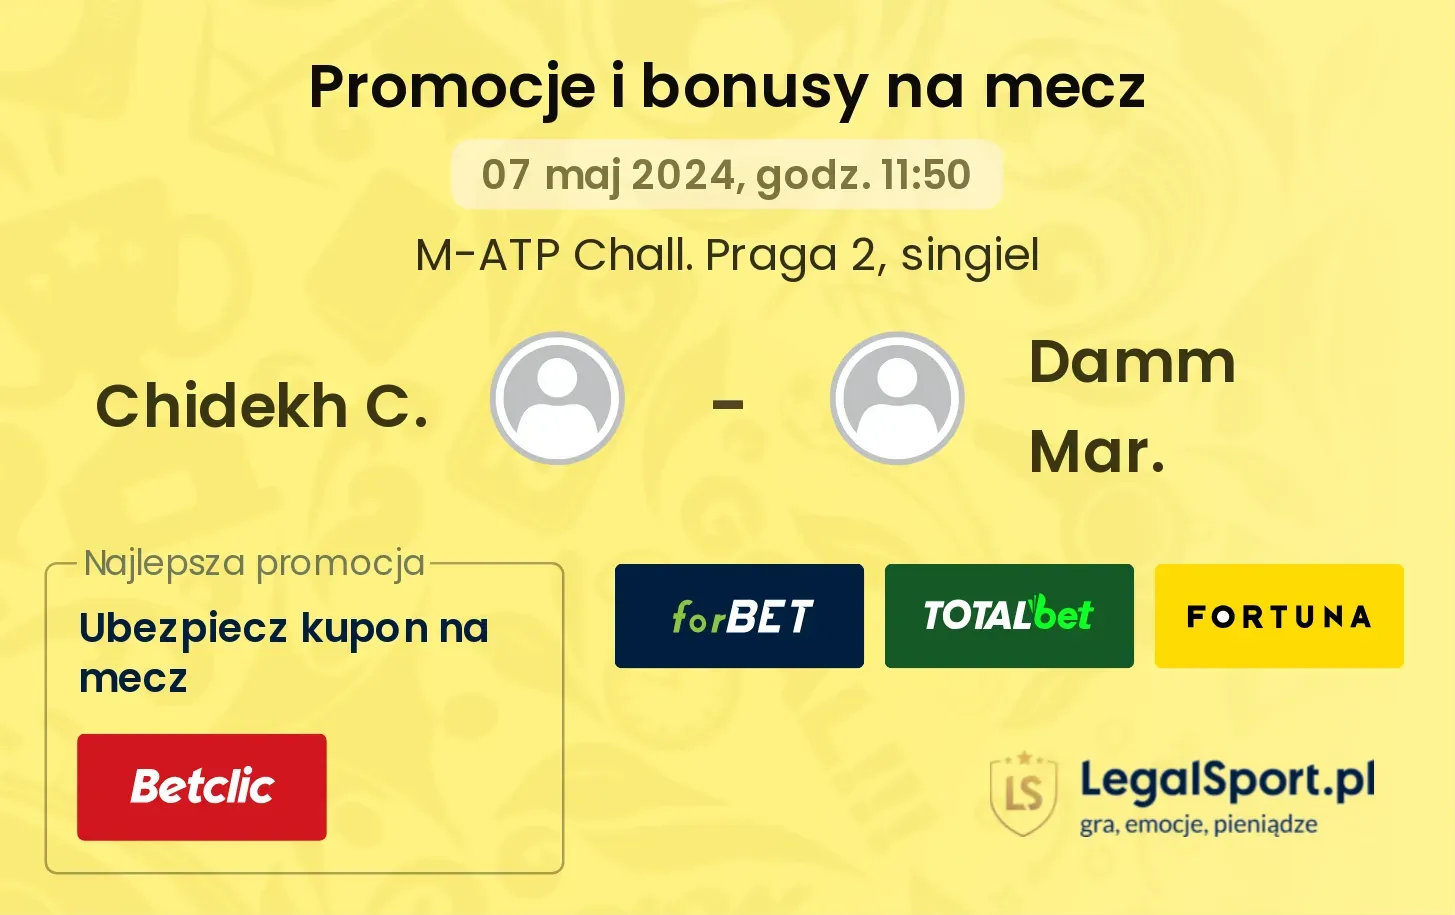 Chidekh C. - Damm Mar. promocje bonusy na mecz